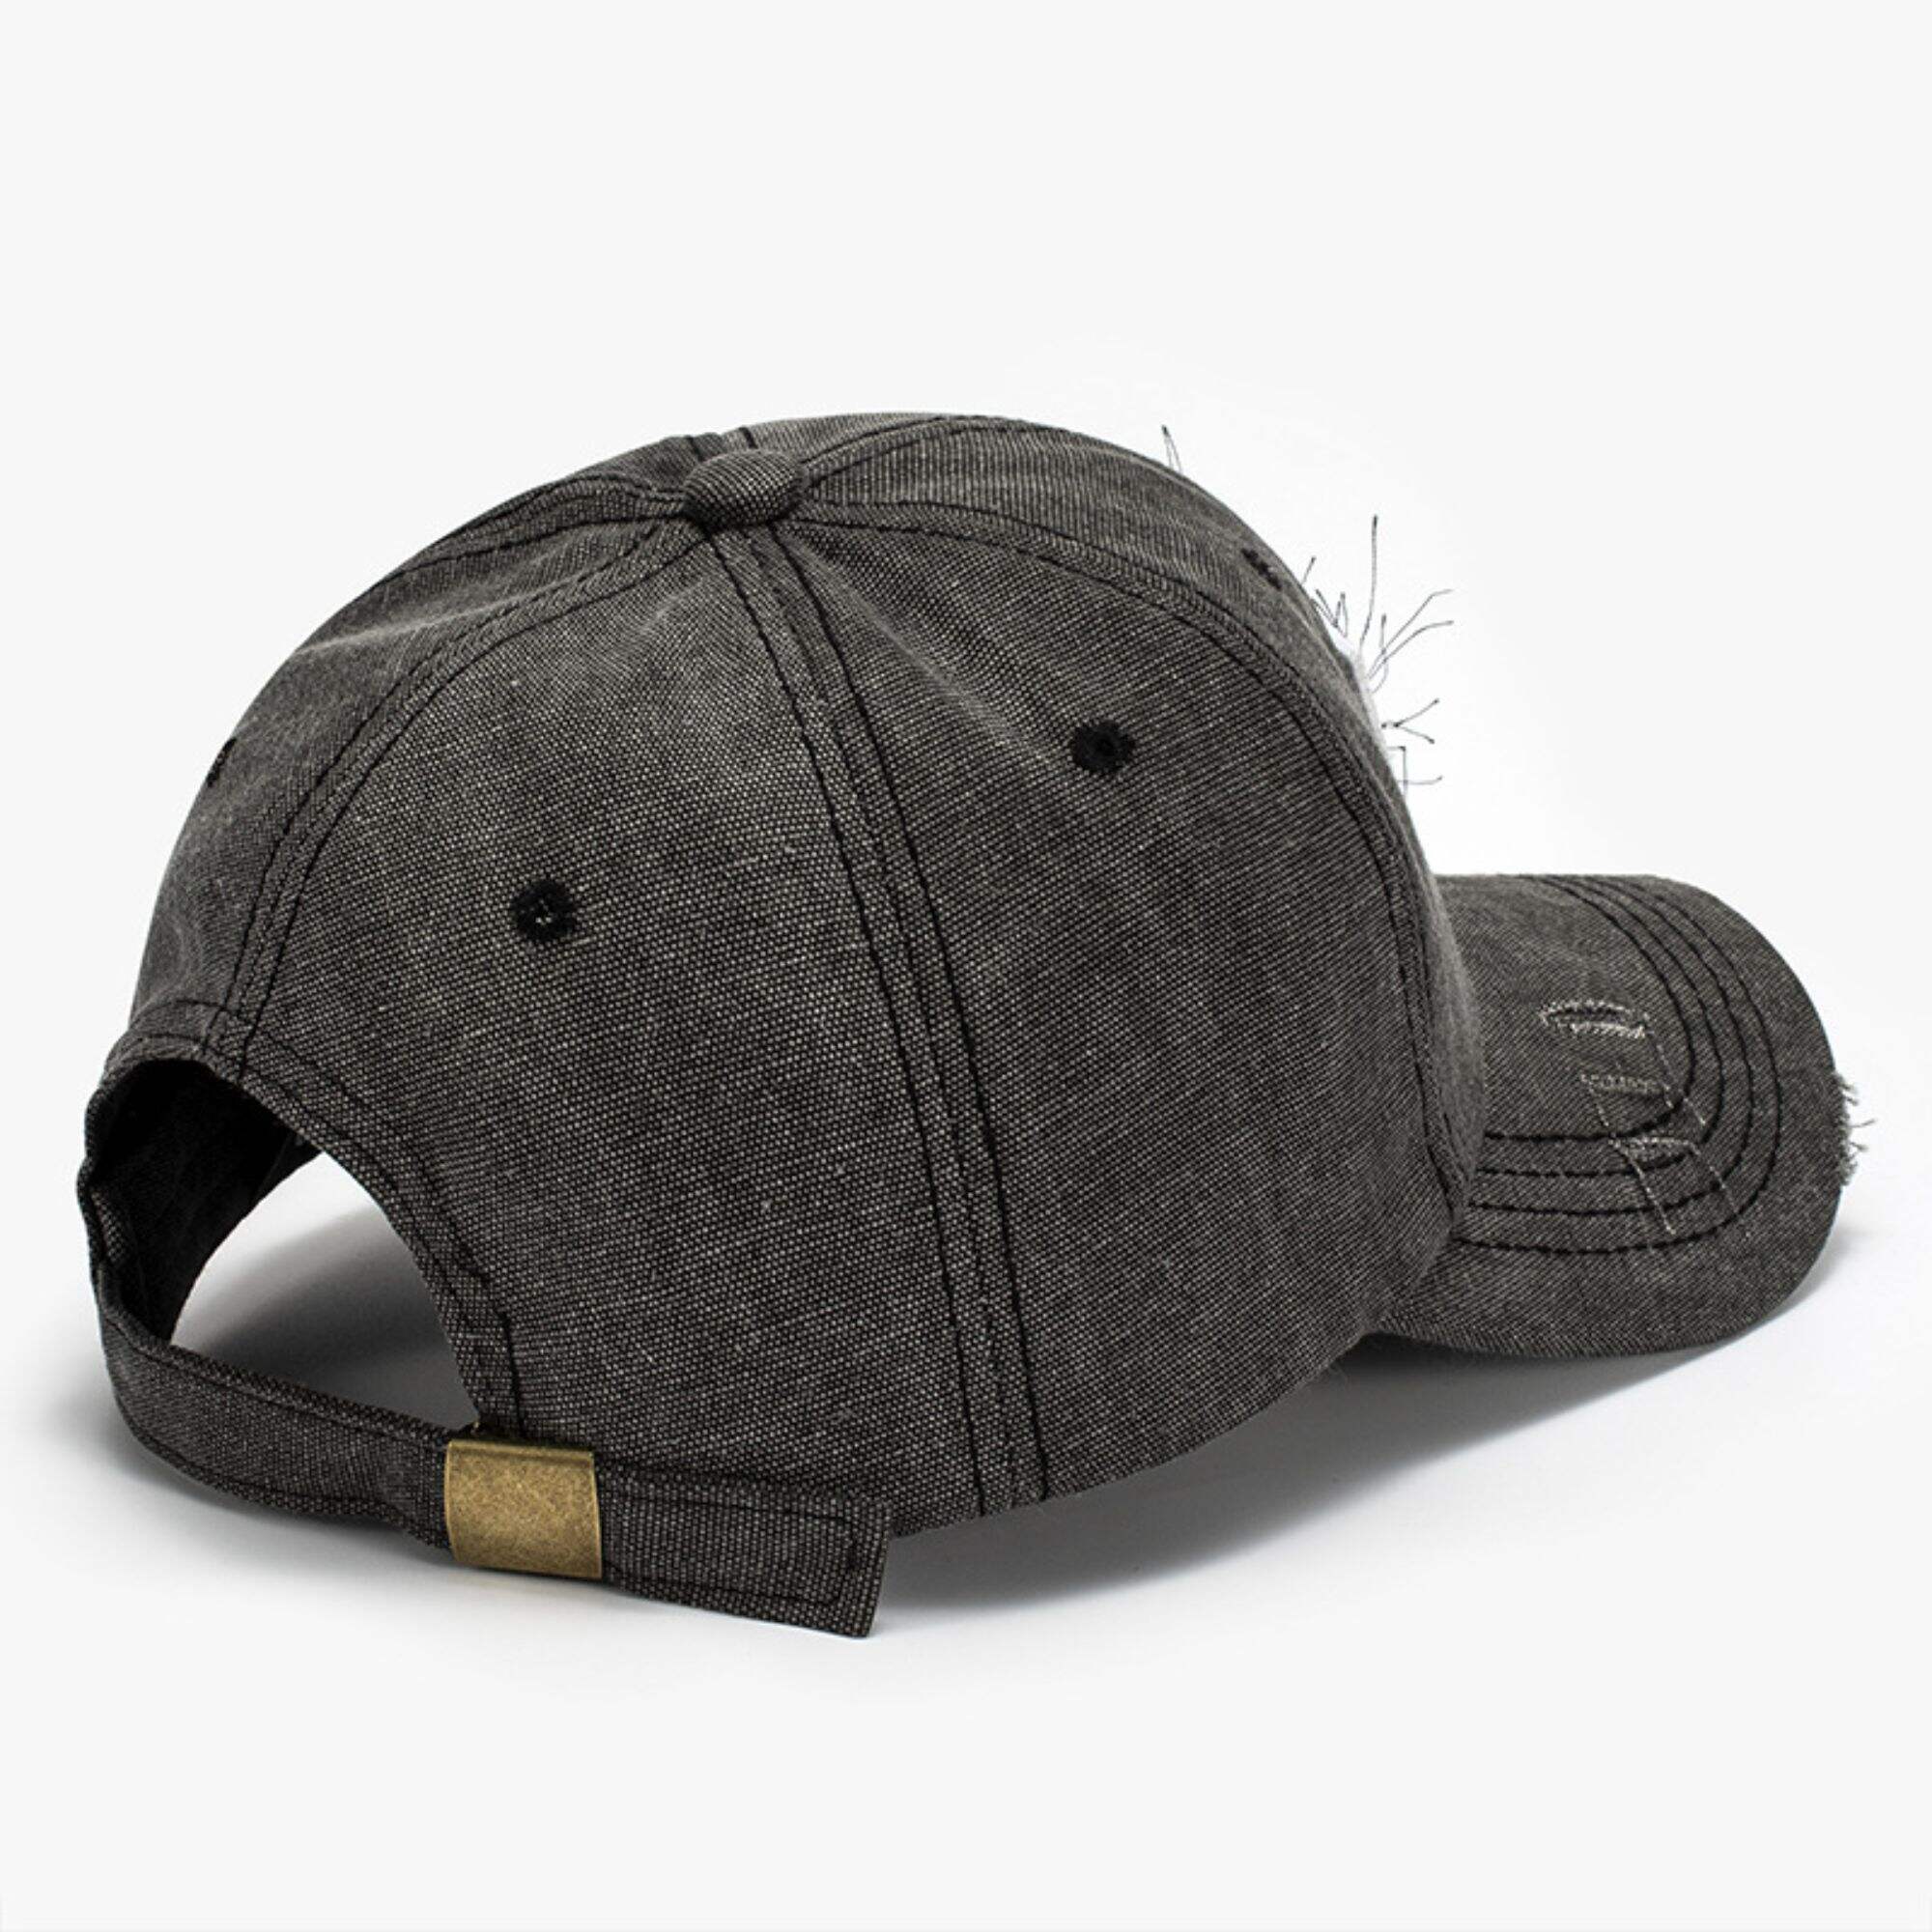 Custom applique embroidered baseball cap